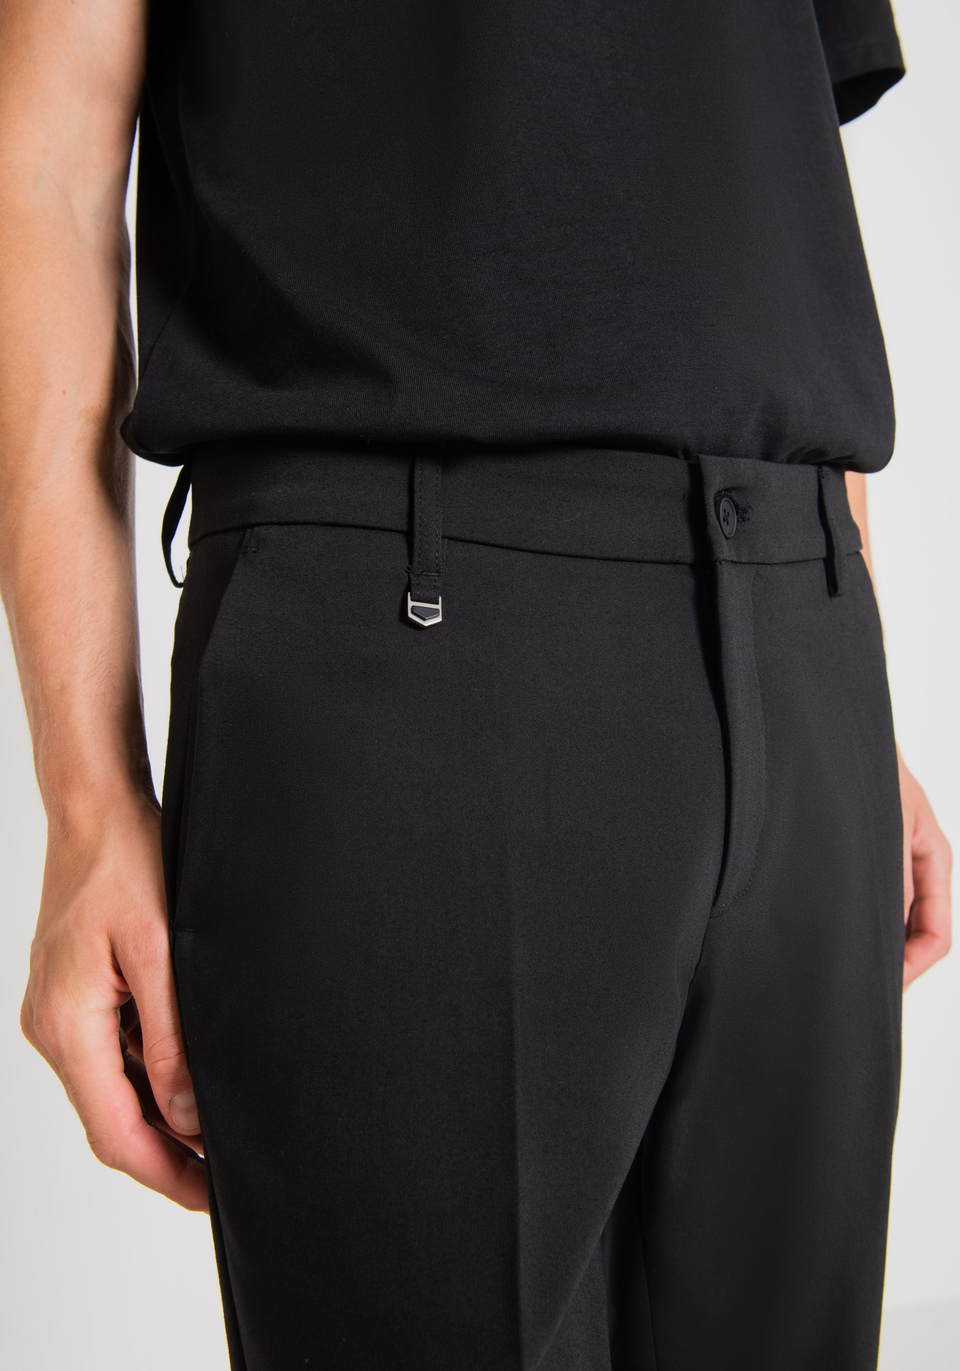 Bershka faux leather skinny trouser with zip hem in black | ASOS